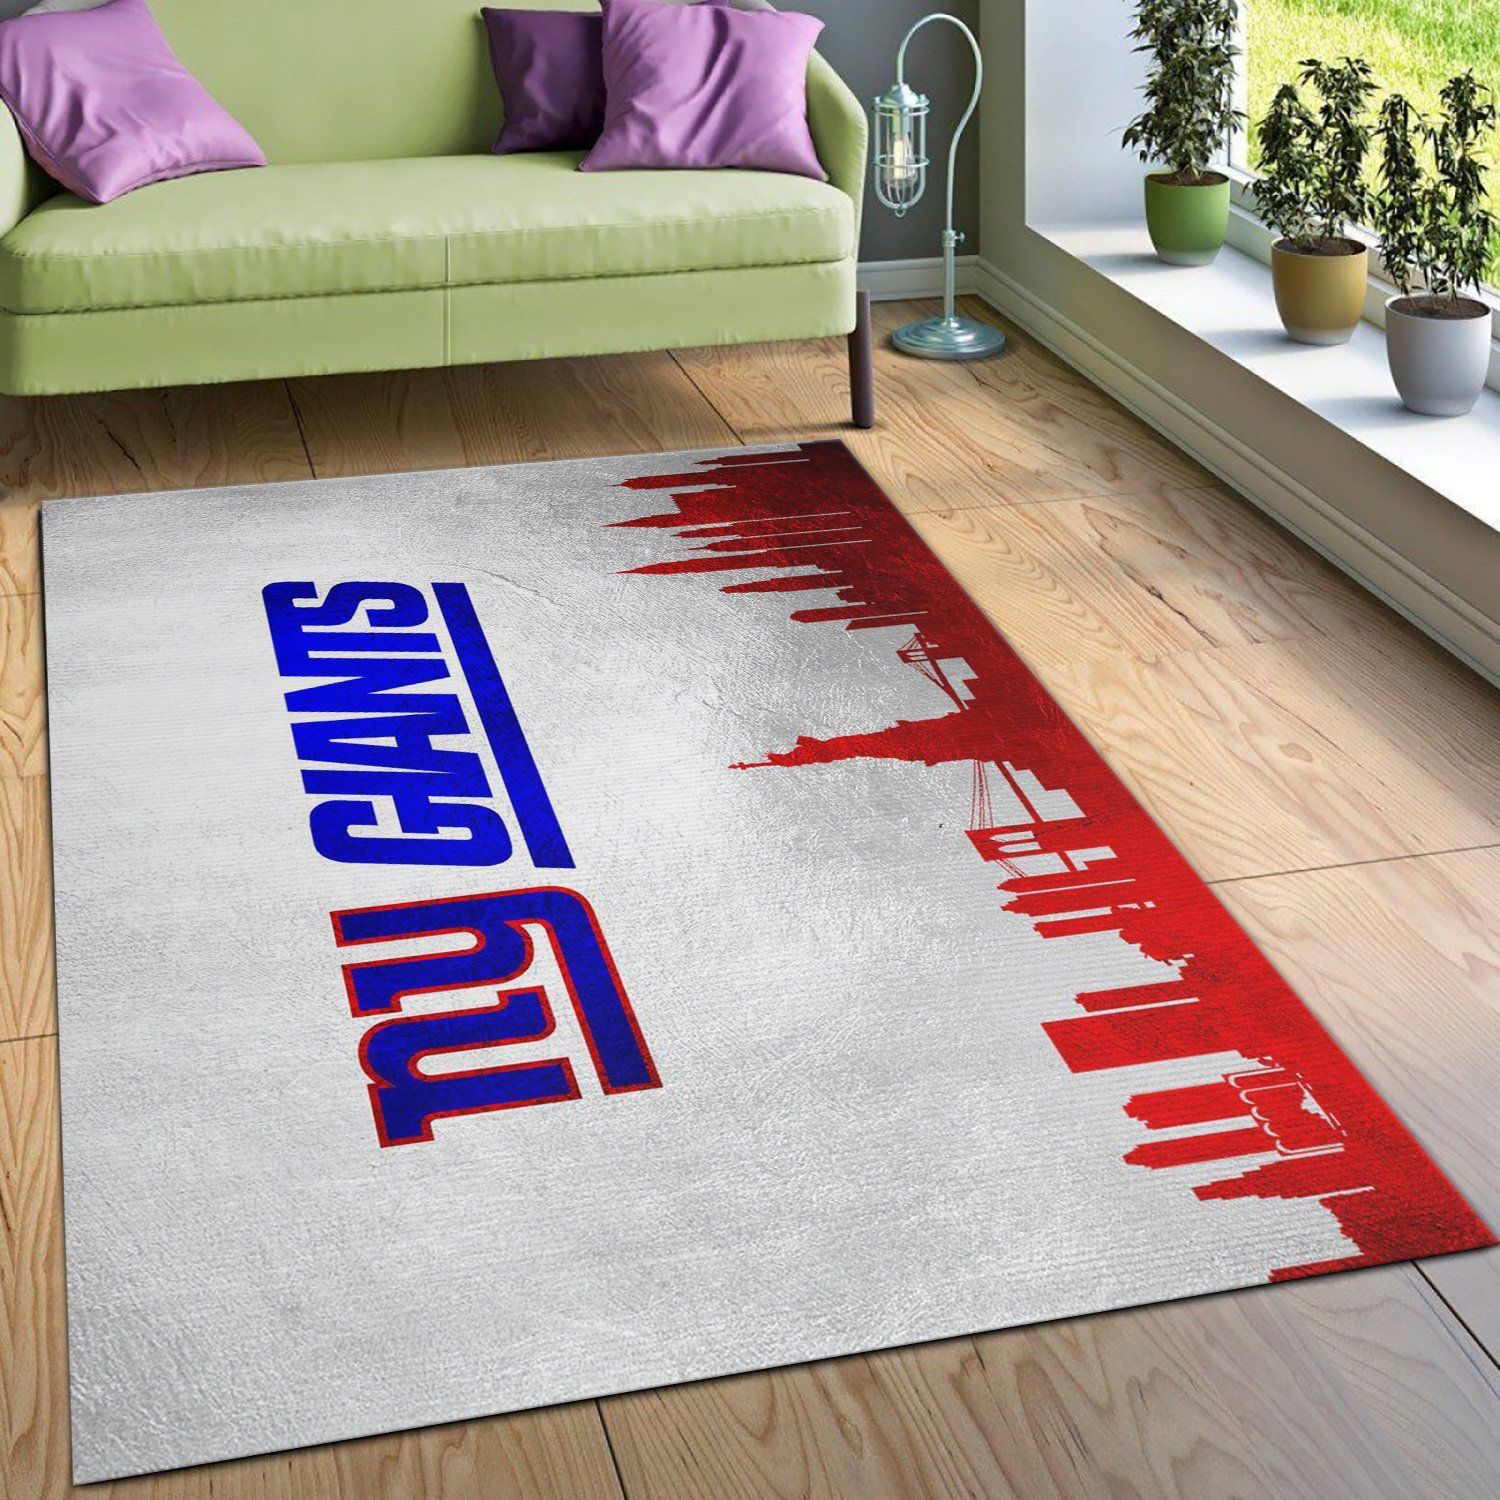 New York Giants Skyline NFL Team Logos Area Rug, Living room and bedroom Rug, Home Decor Floor Decor - Indoor Outdoor Rugs